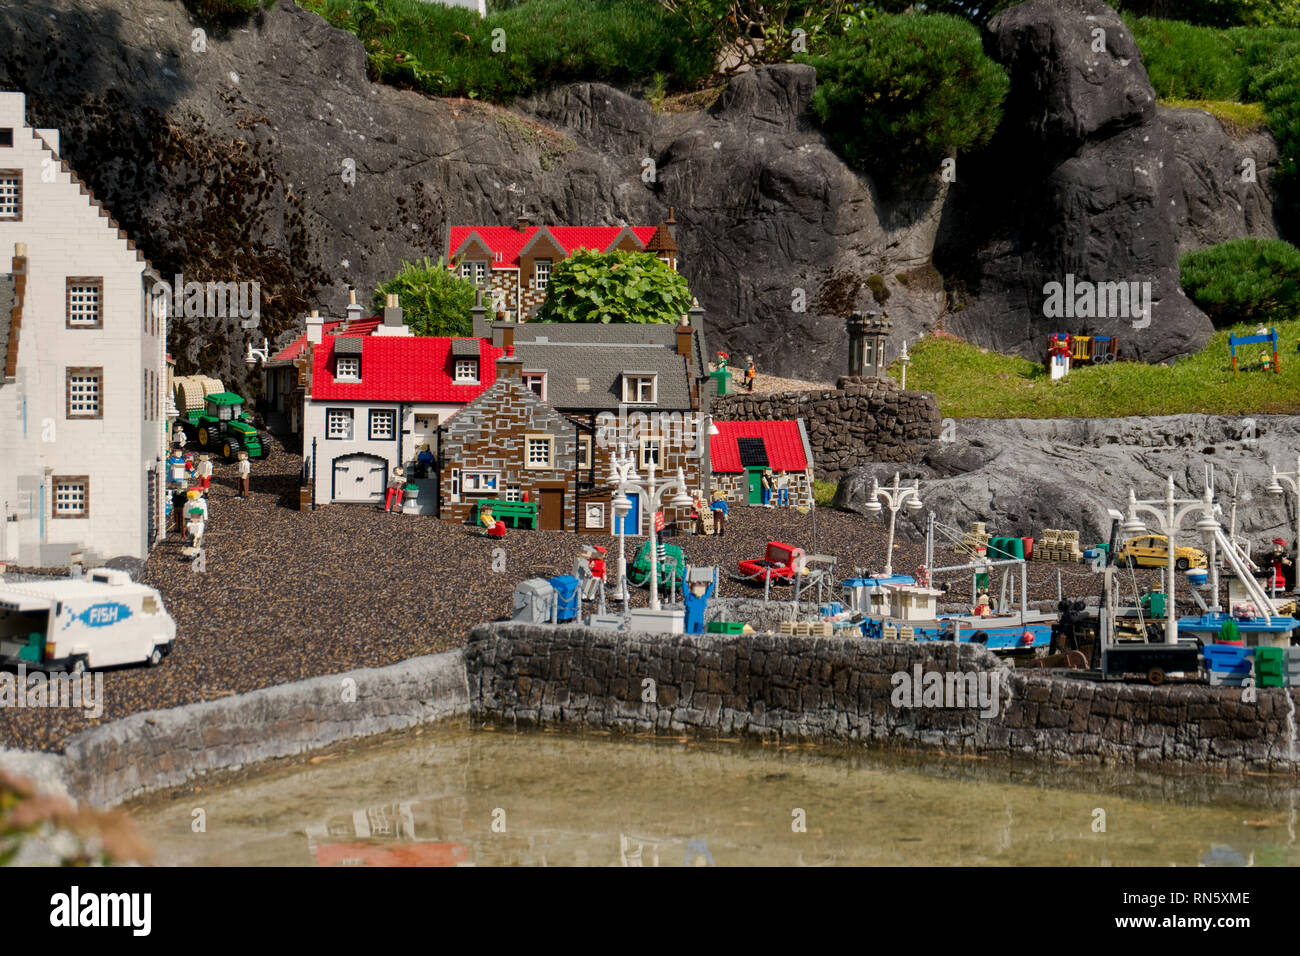 A Lego fishing village and dock at Legoland Billund resort in Denmark Stock  Photo - Alamy